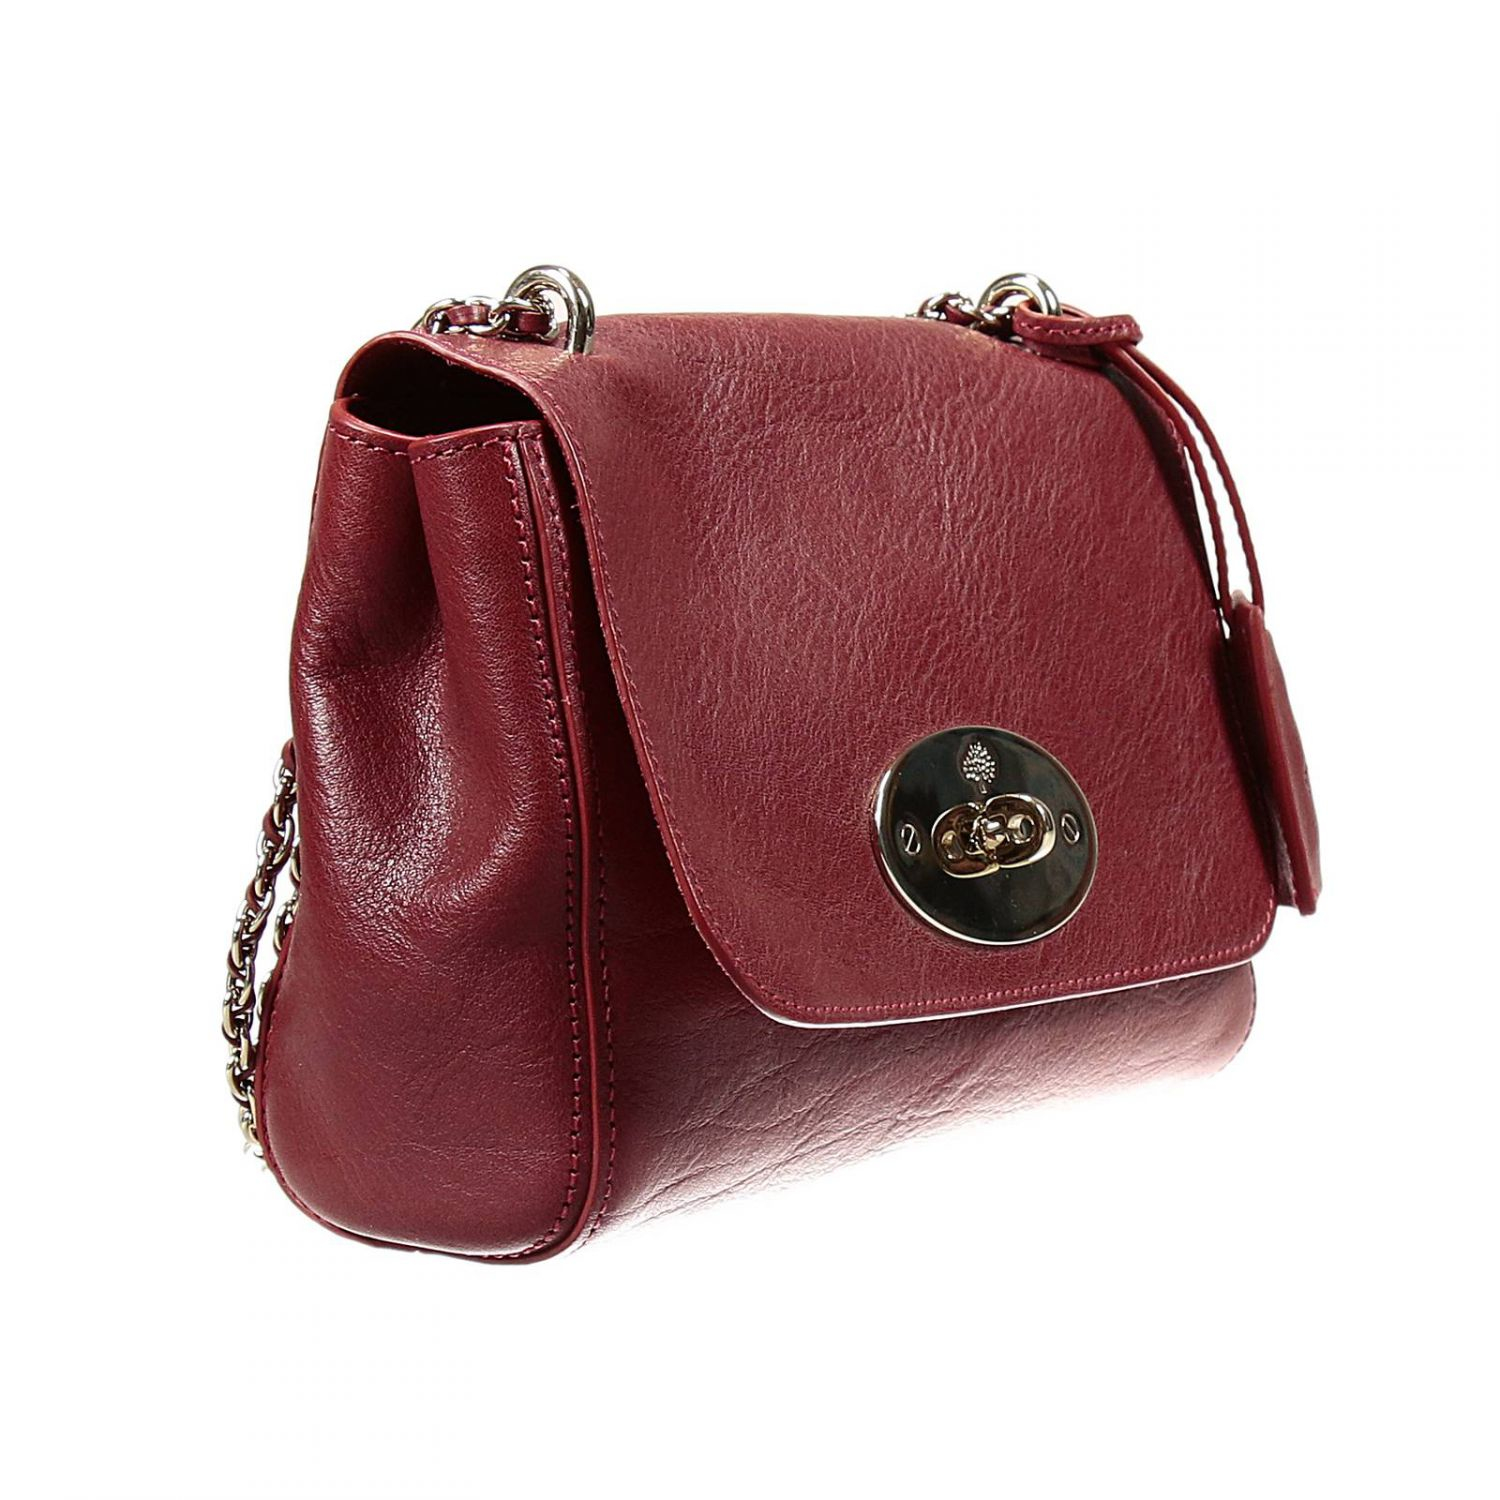 Roberta Di Camerino Handbags: Mulberry Handbag